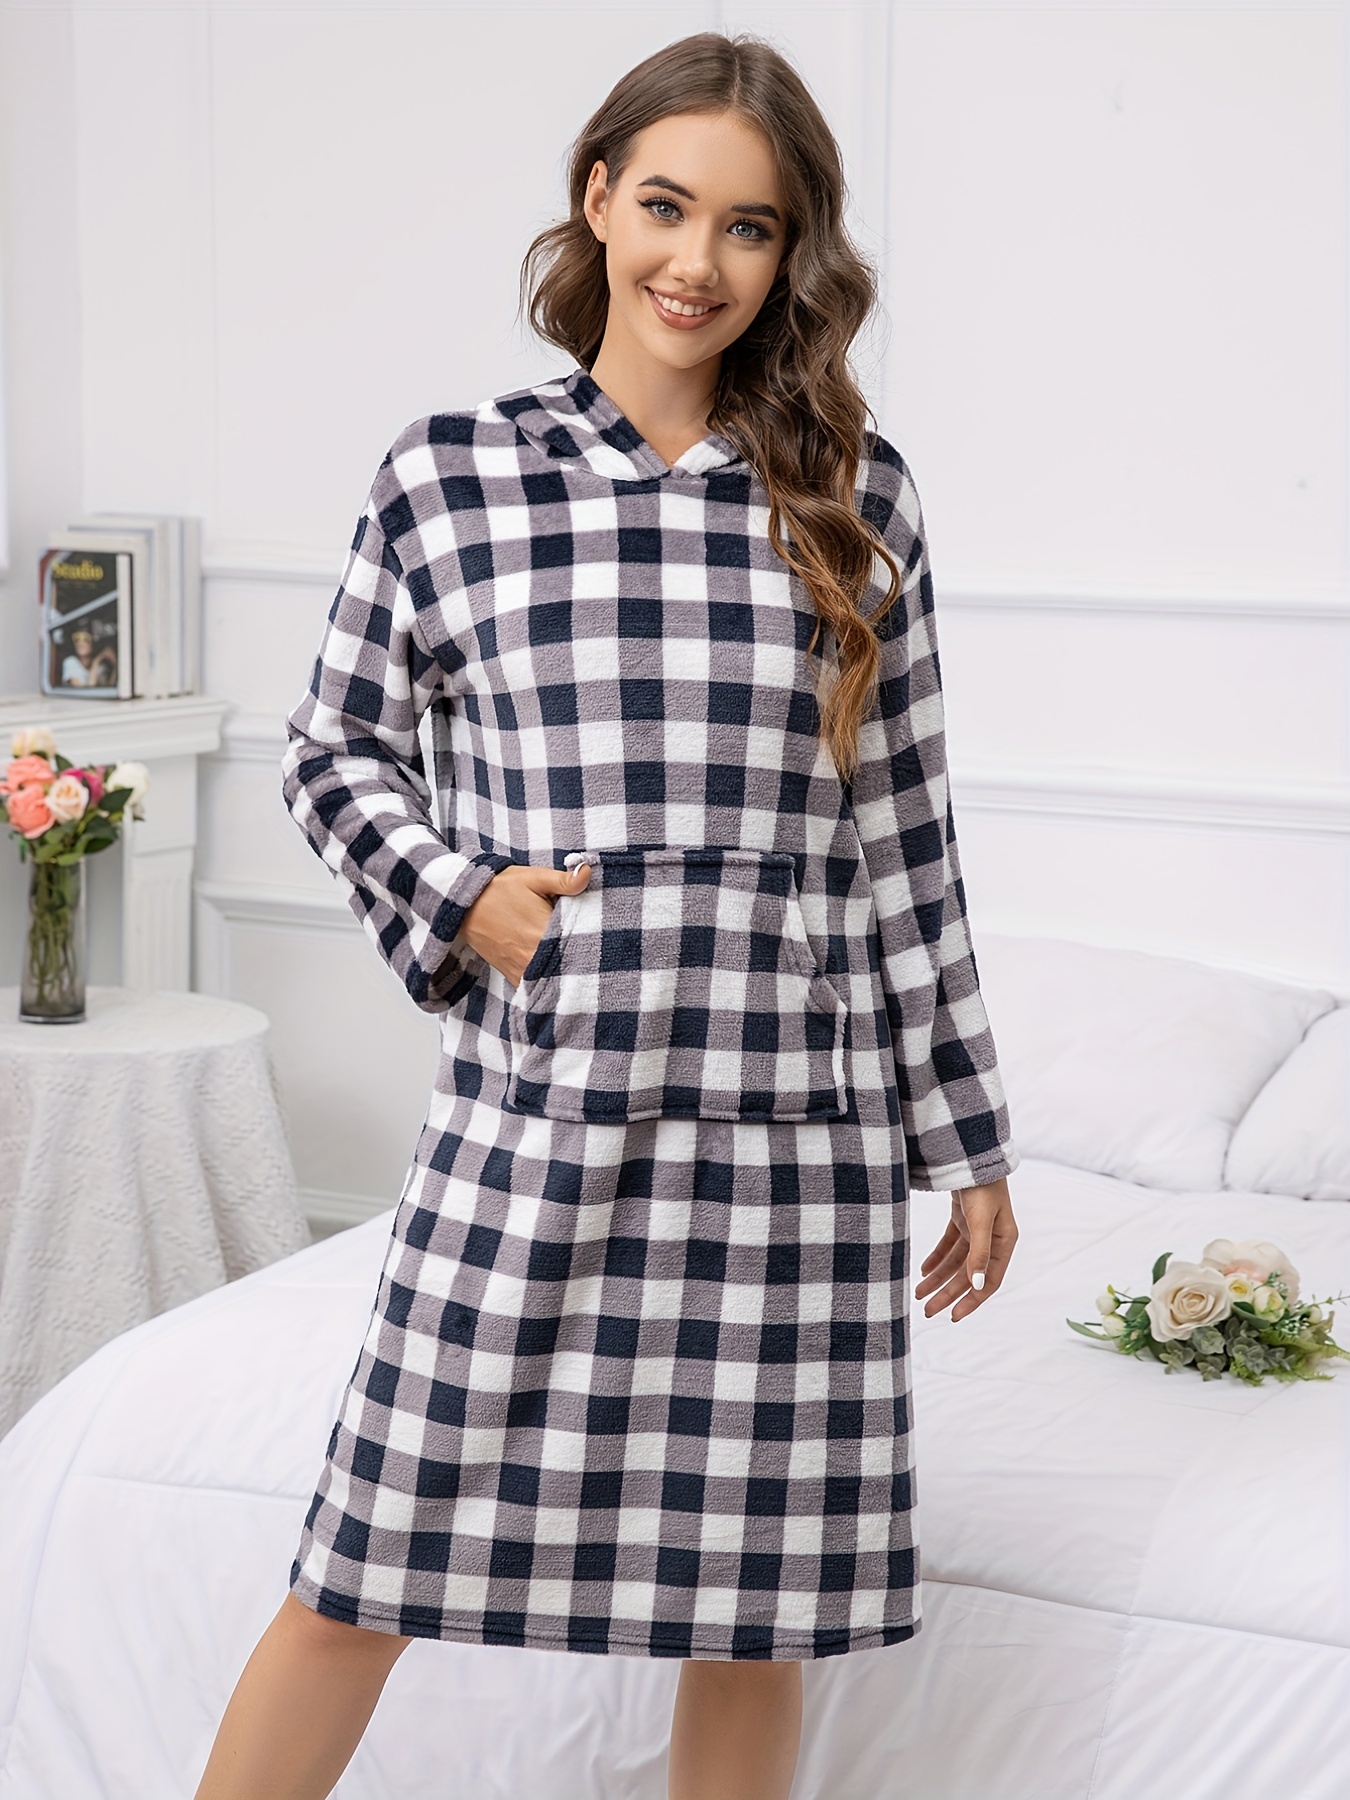 Metropolitan Womens Long Sleeve Flannel Nightgown Zippered